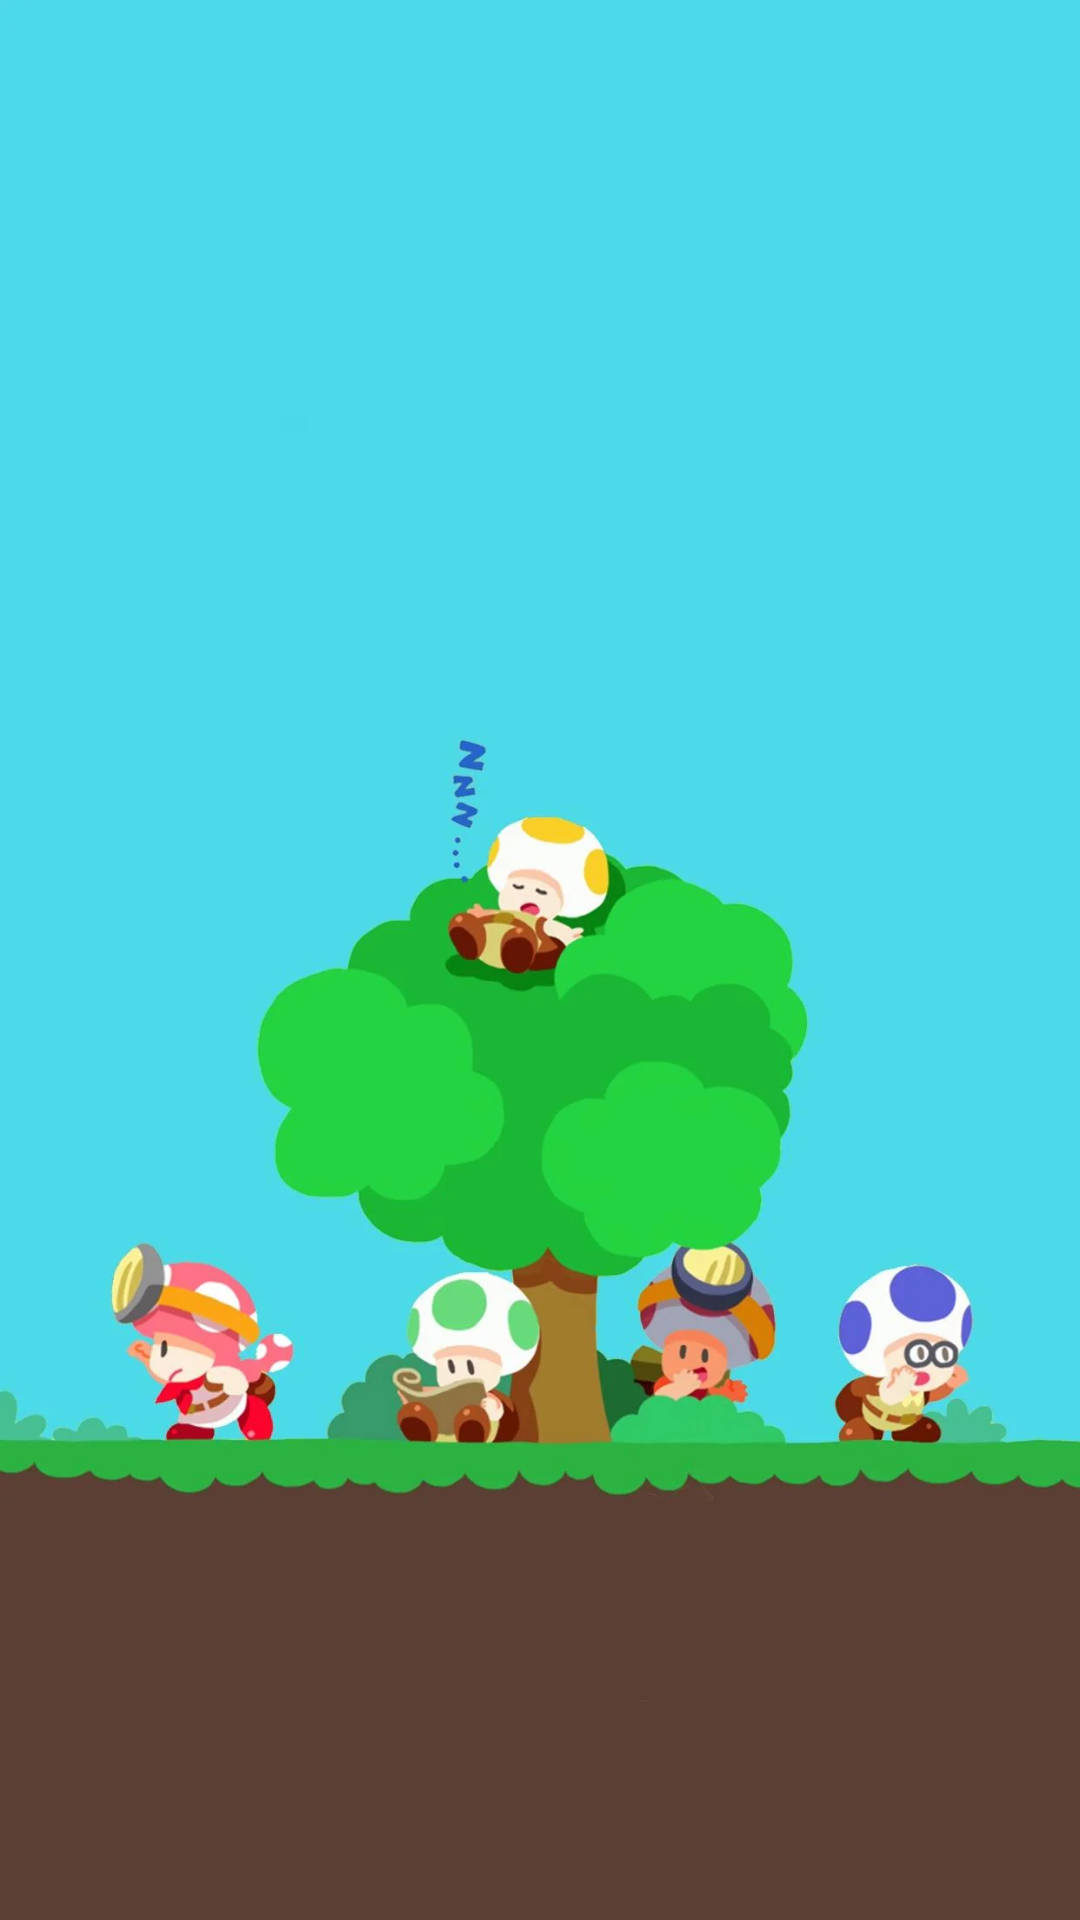 Cute Toad Nintendo Character